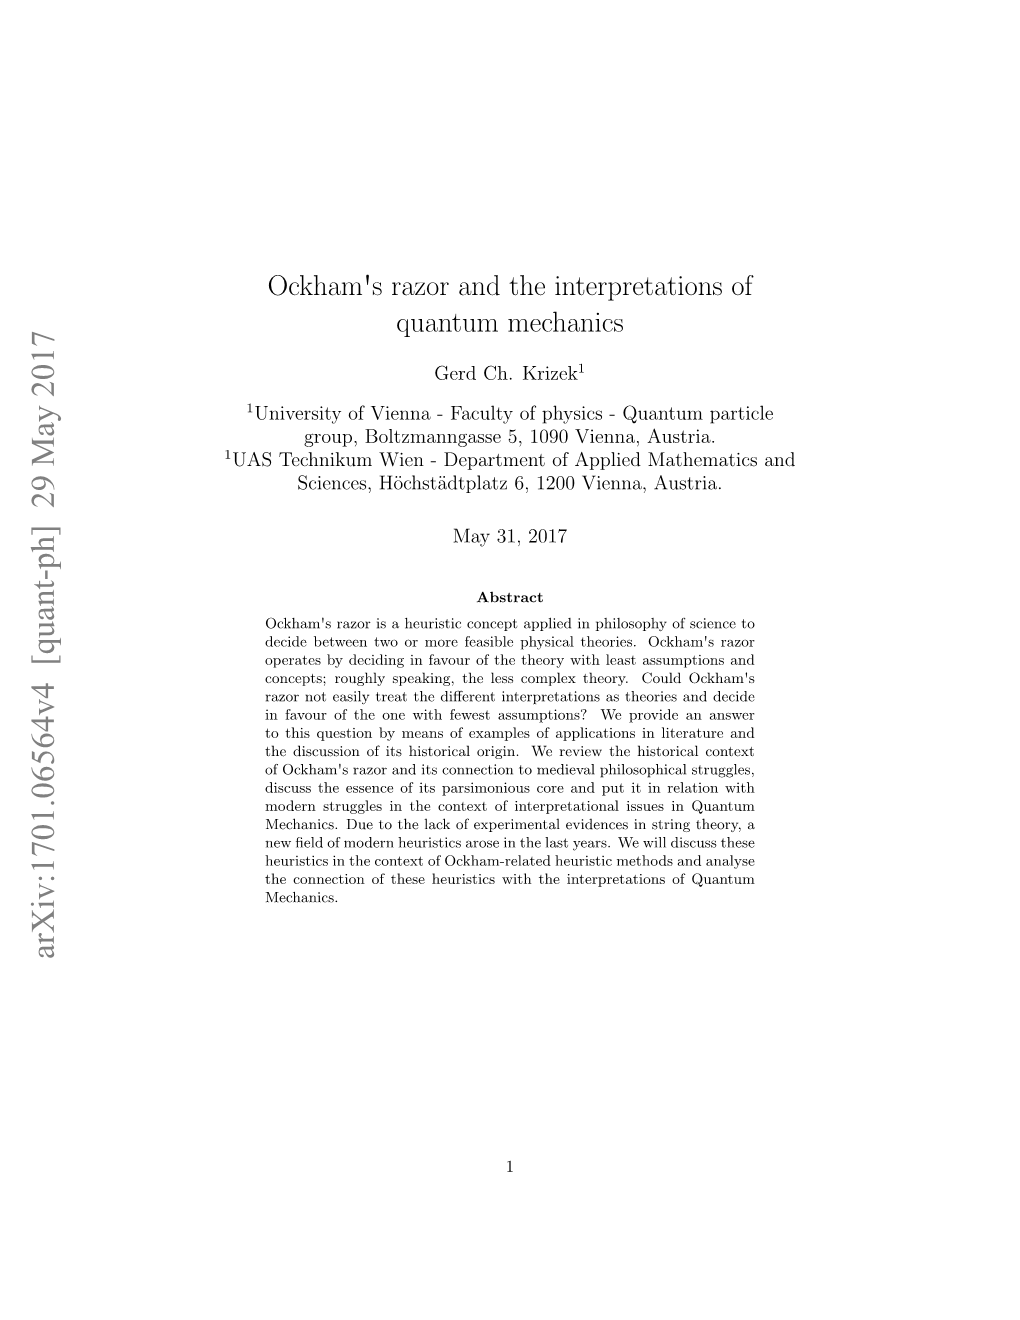 Ockham's Razor and the Interpretations of Quantum Mechanics